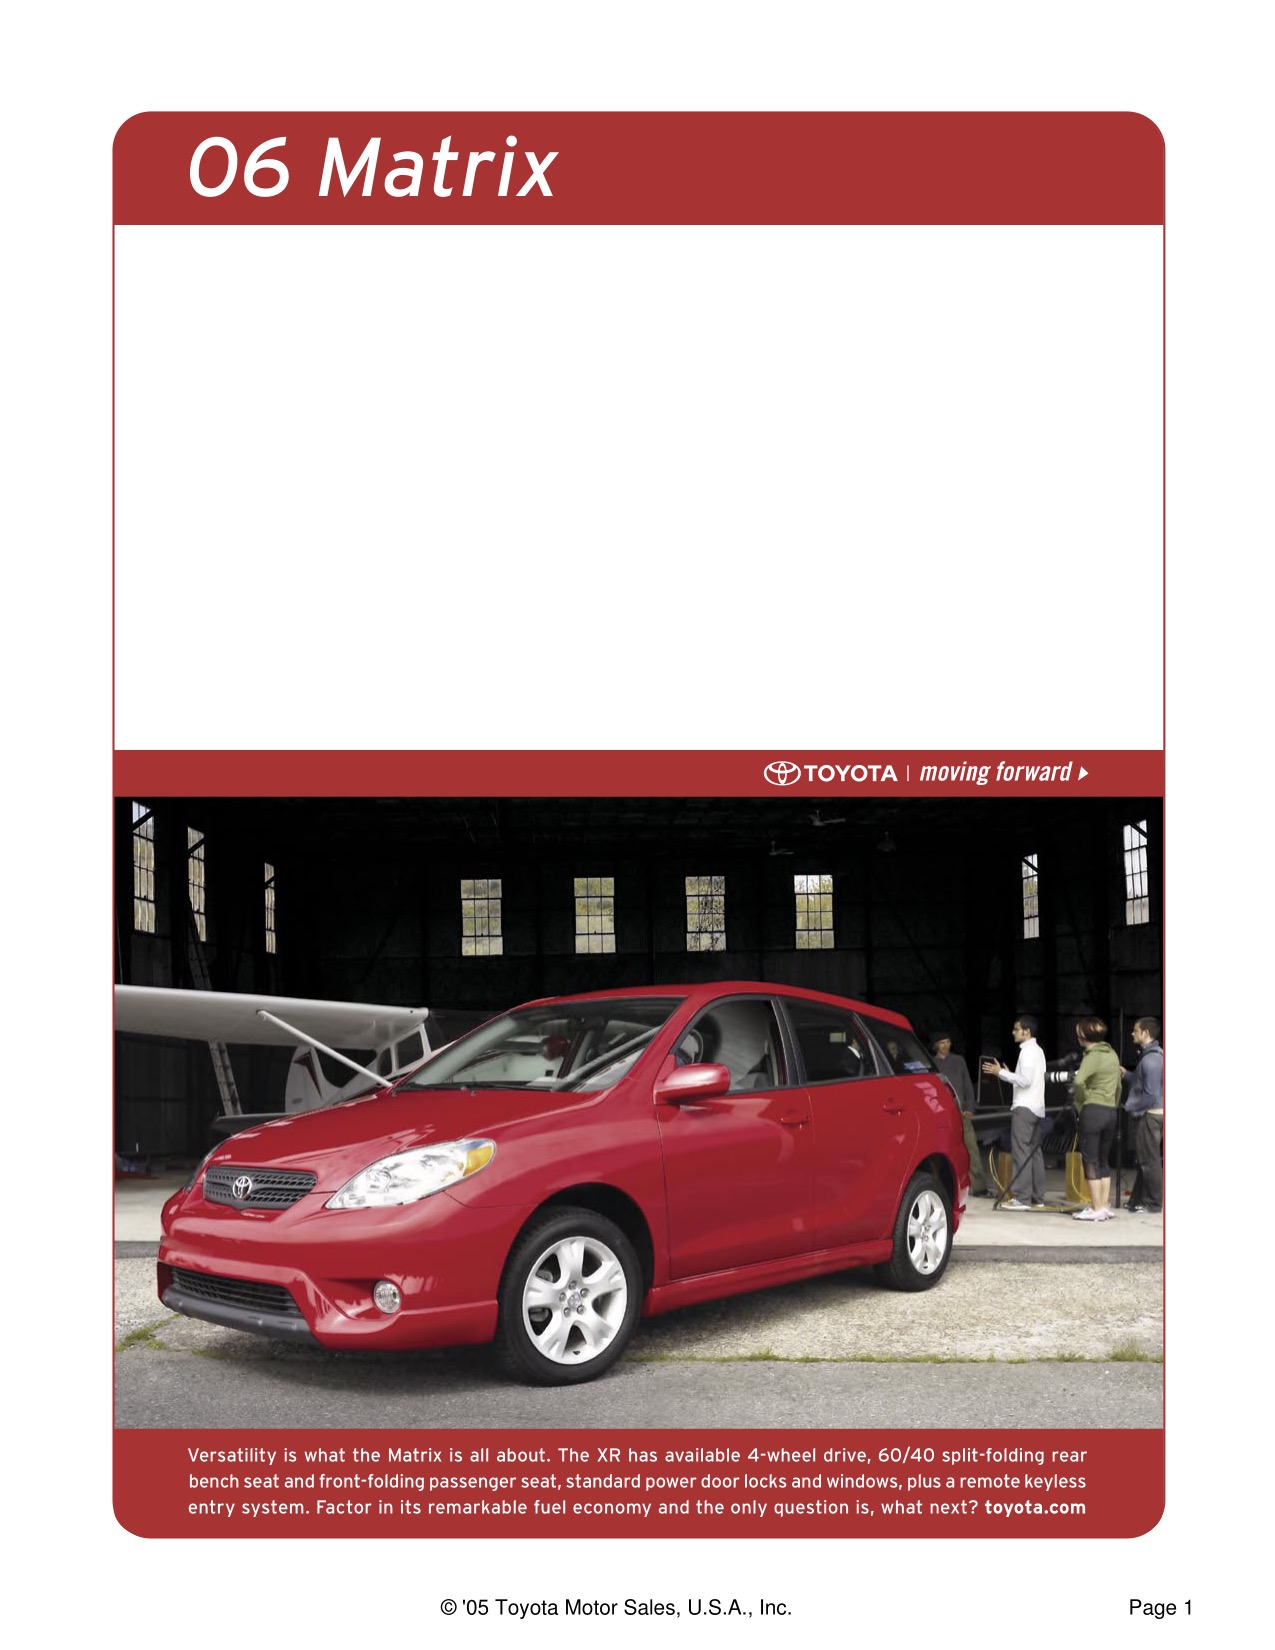 2006 Toyota Matrix Brochure